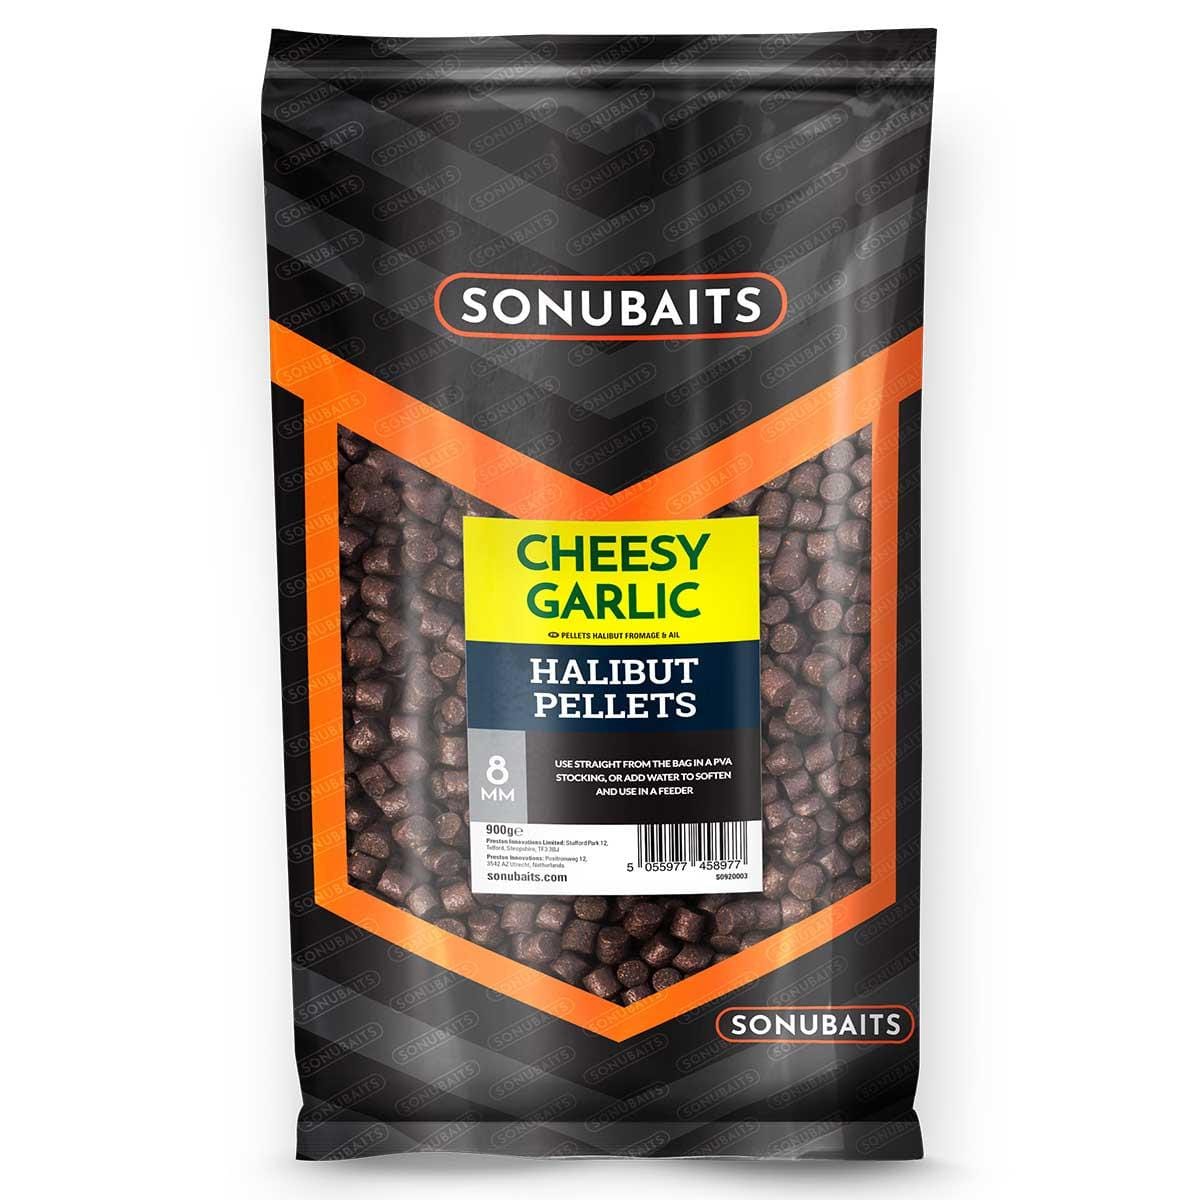 Sonubaits Cheesy Garlic Halibut Pellets - 900g